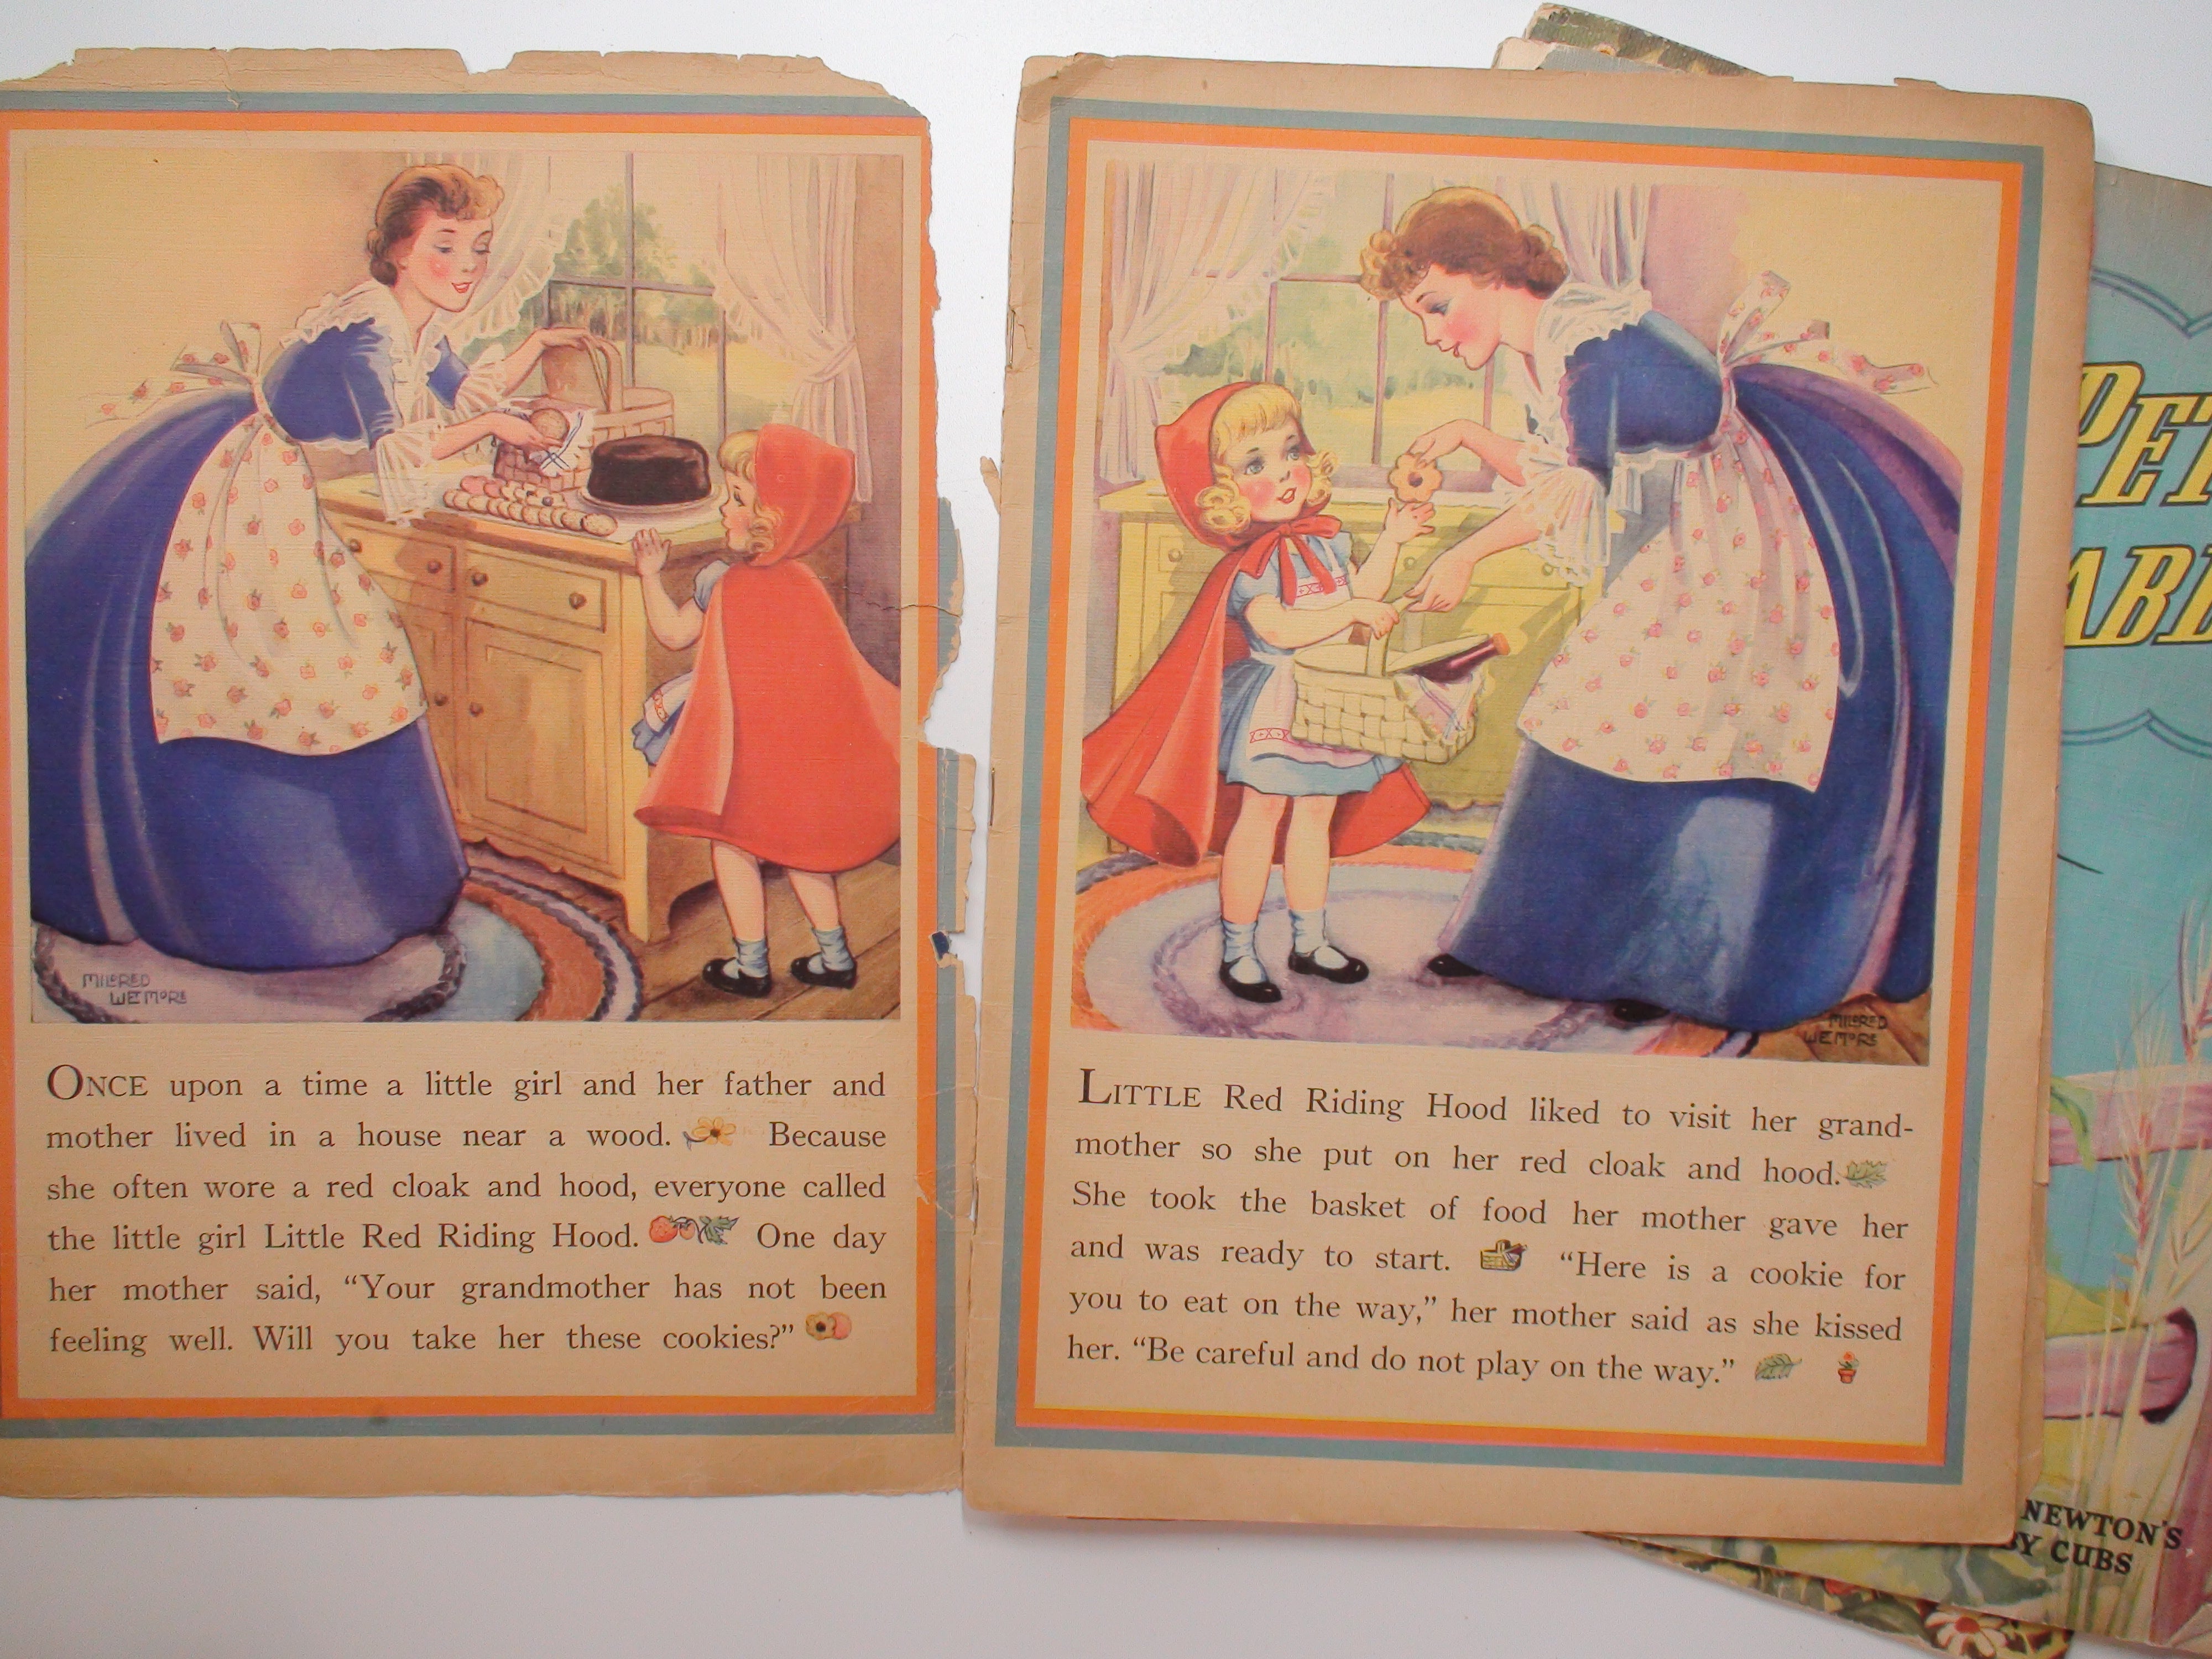 Lot of 3 Children's Books, Red Riding Hood, Three Bears, Peter Rabbit, c1940s